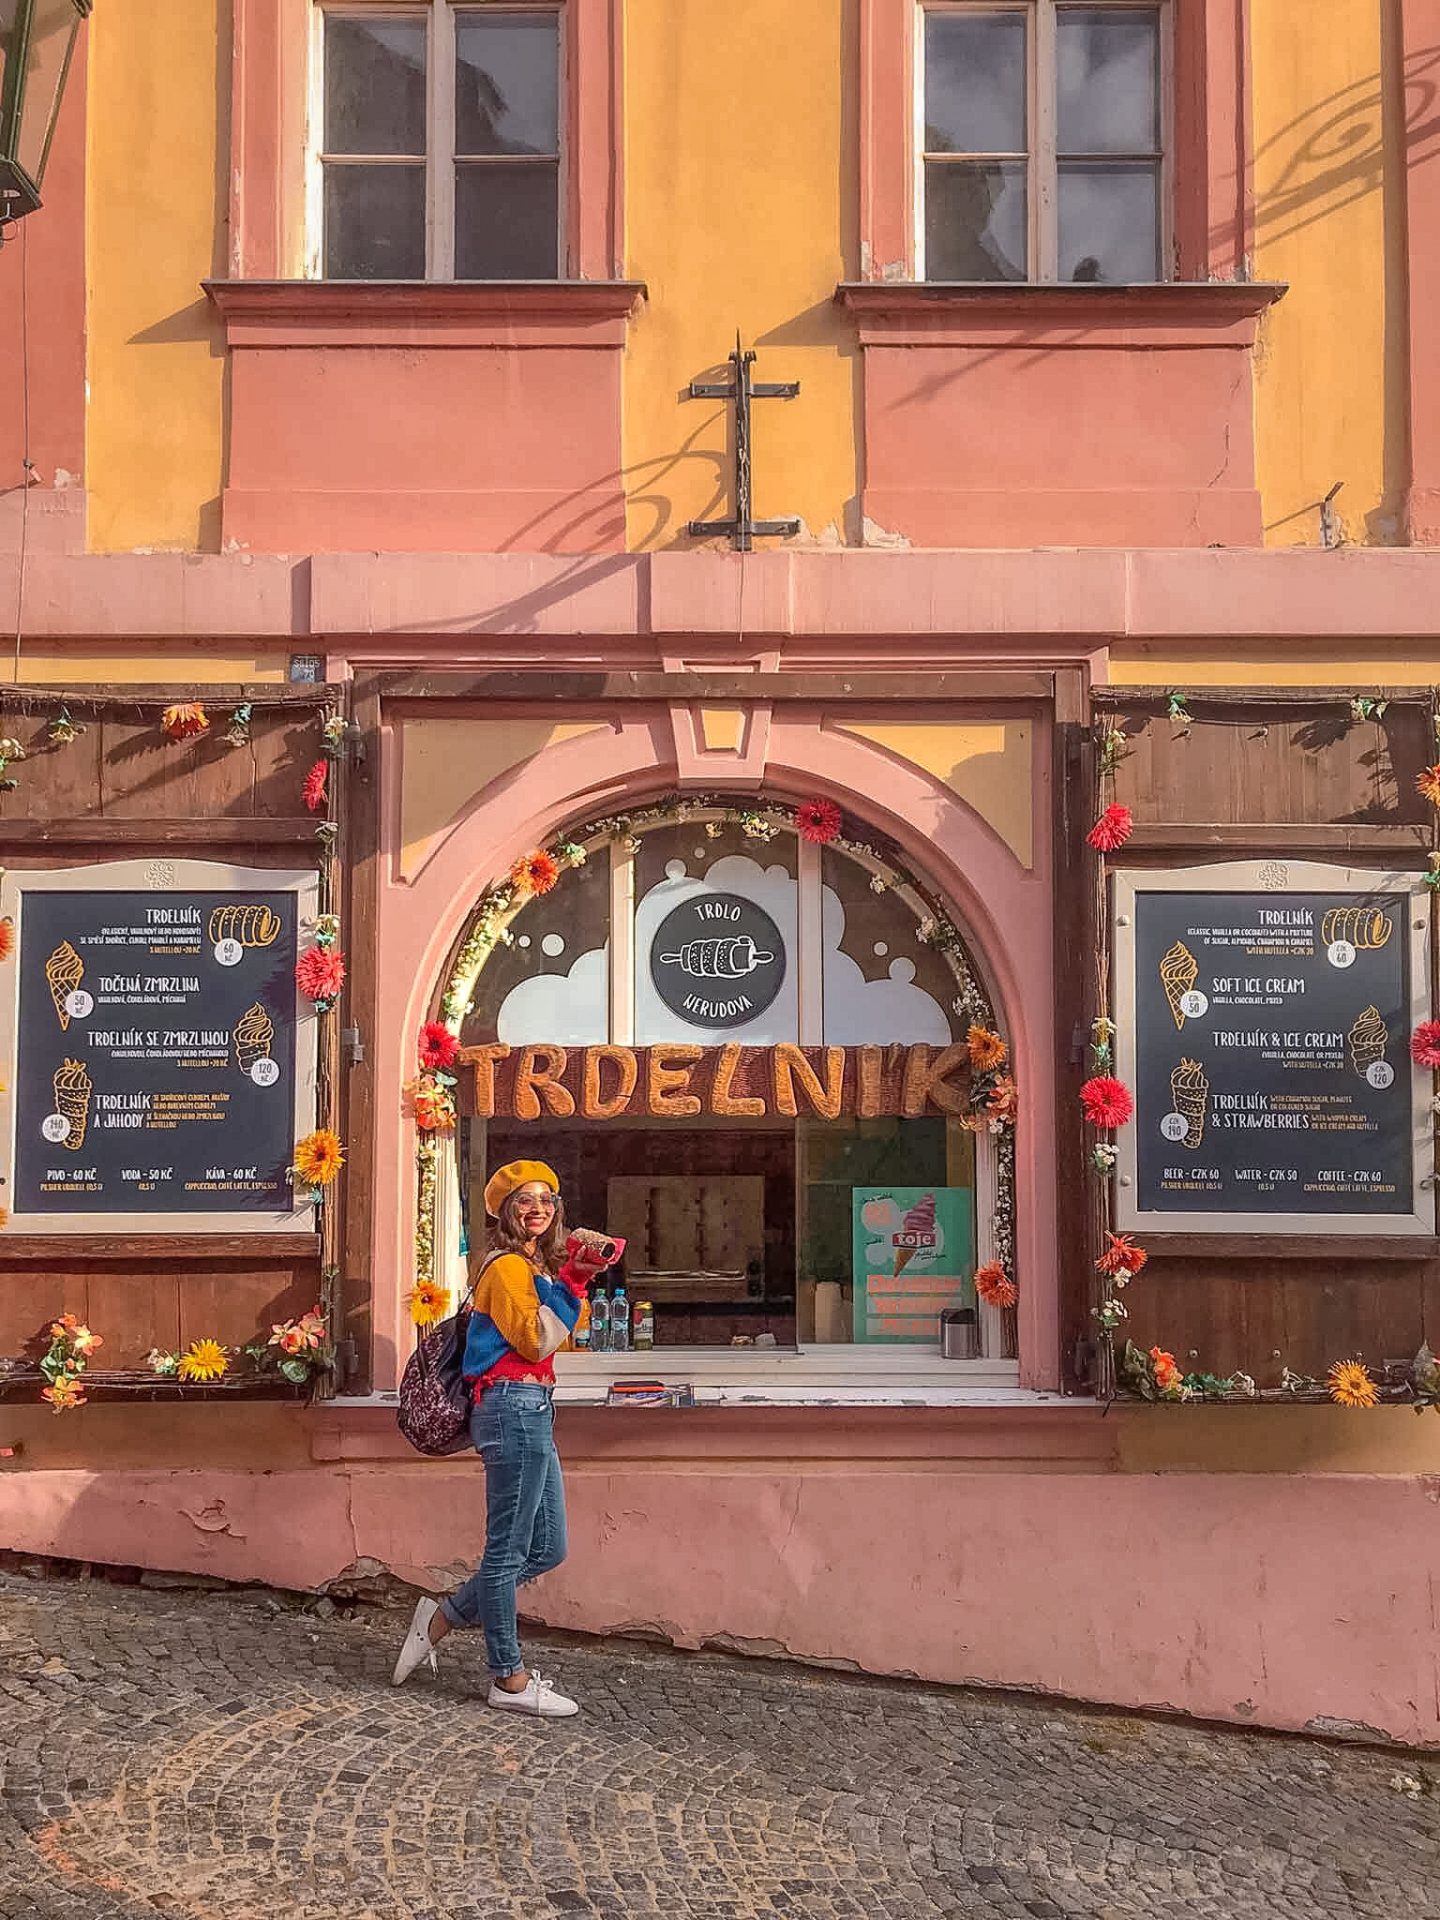 The popular Prague street food Trdelnik